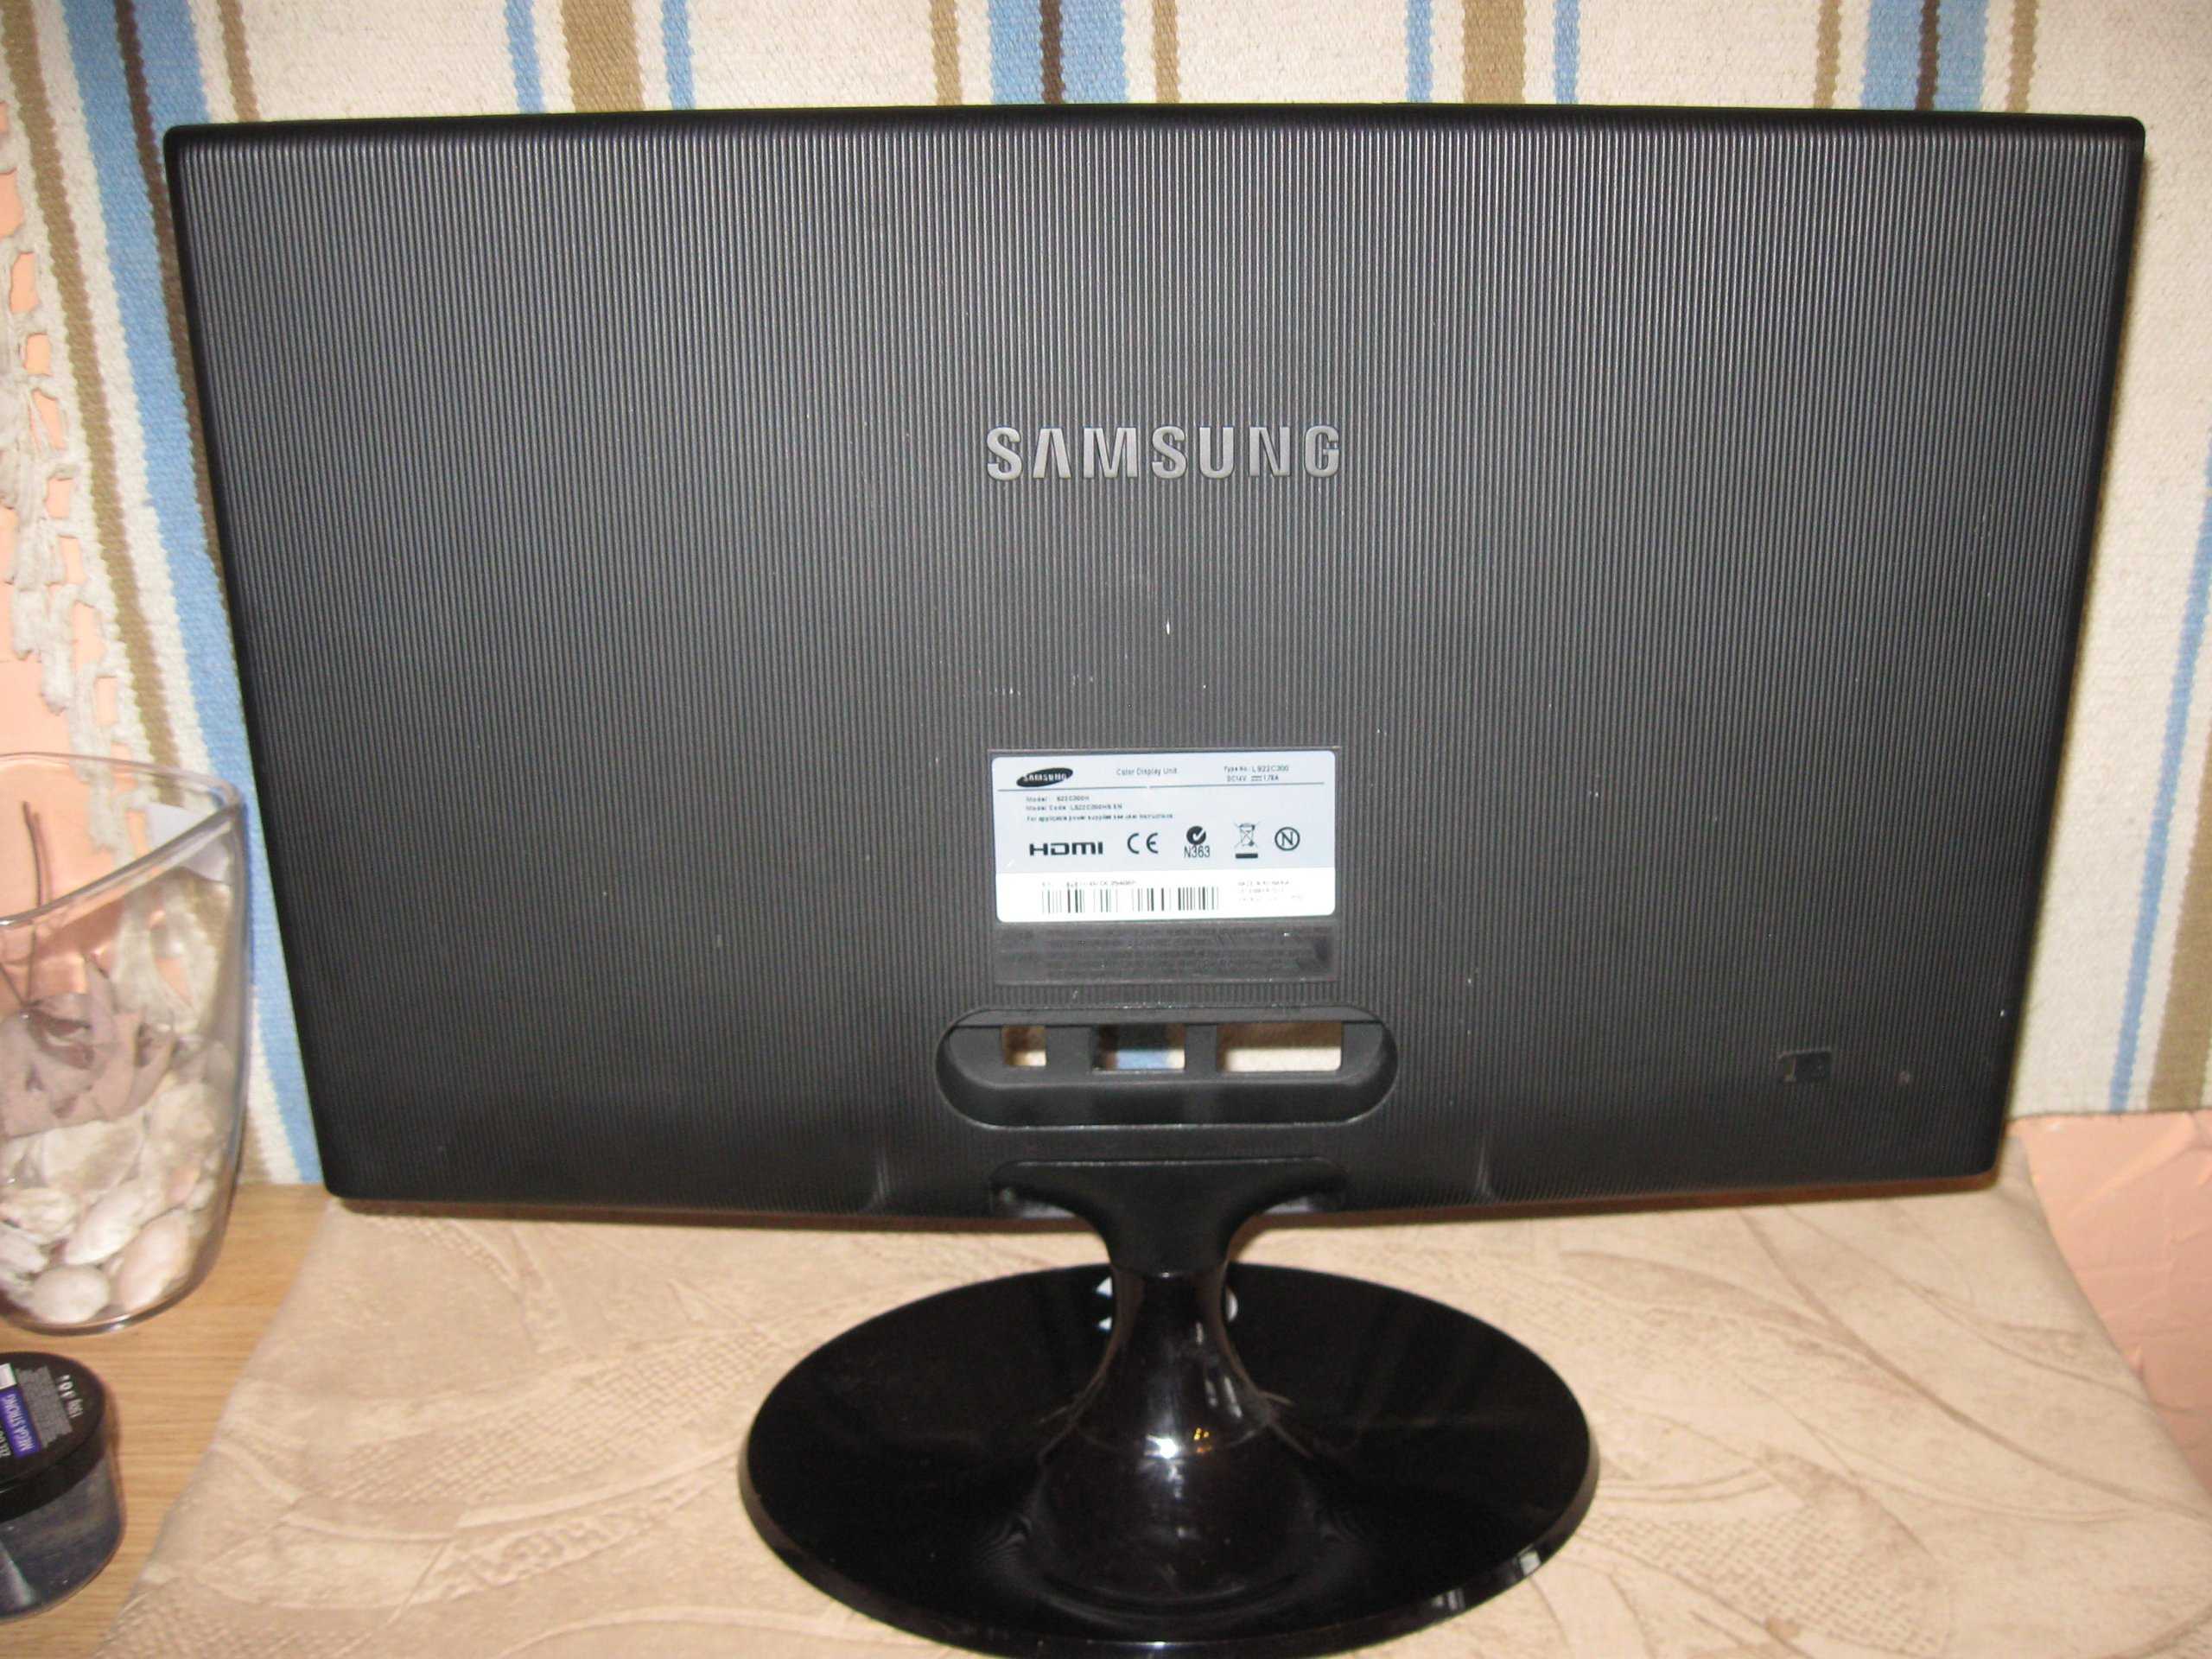 Samsung s22c300b